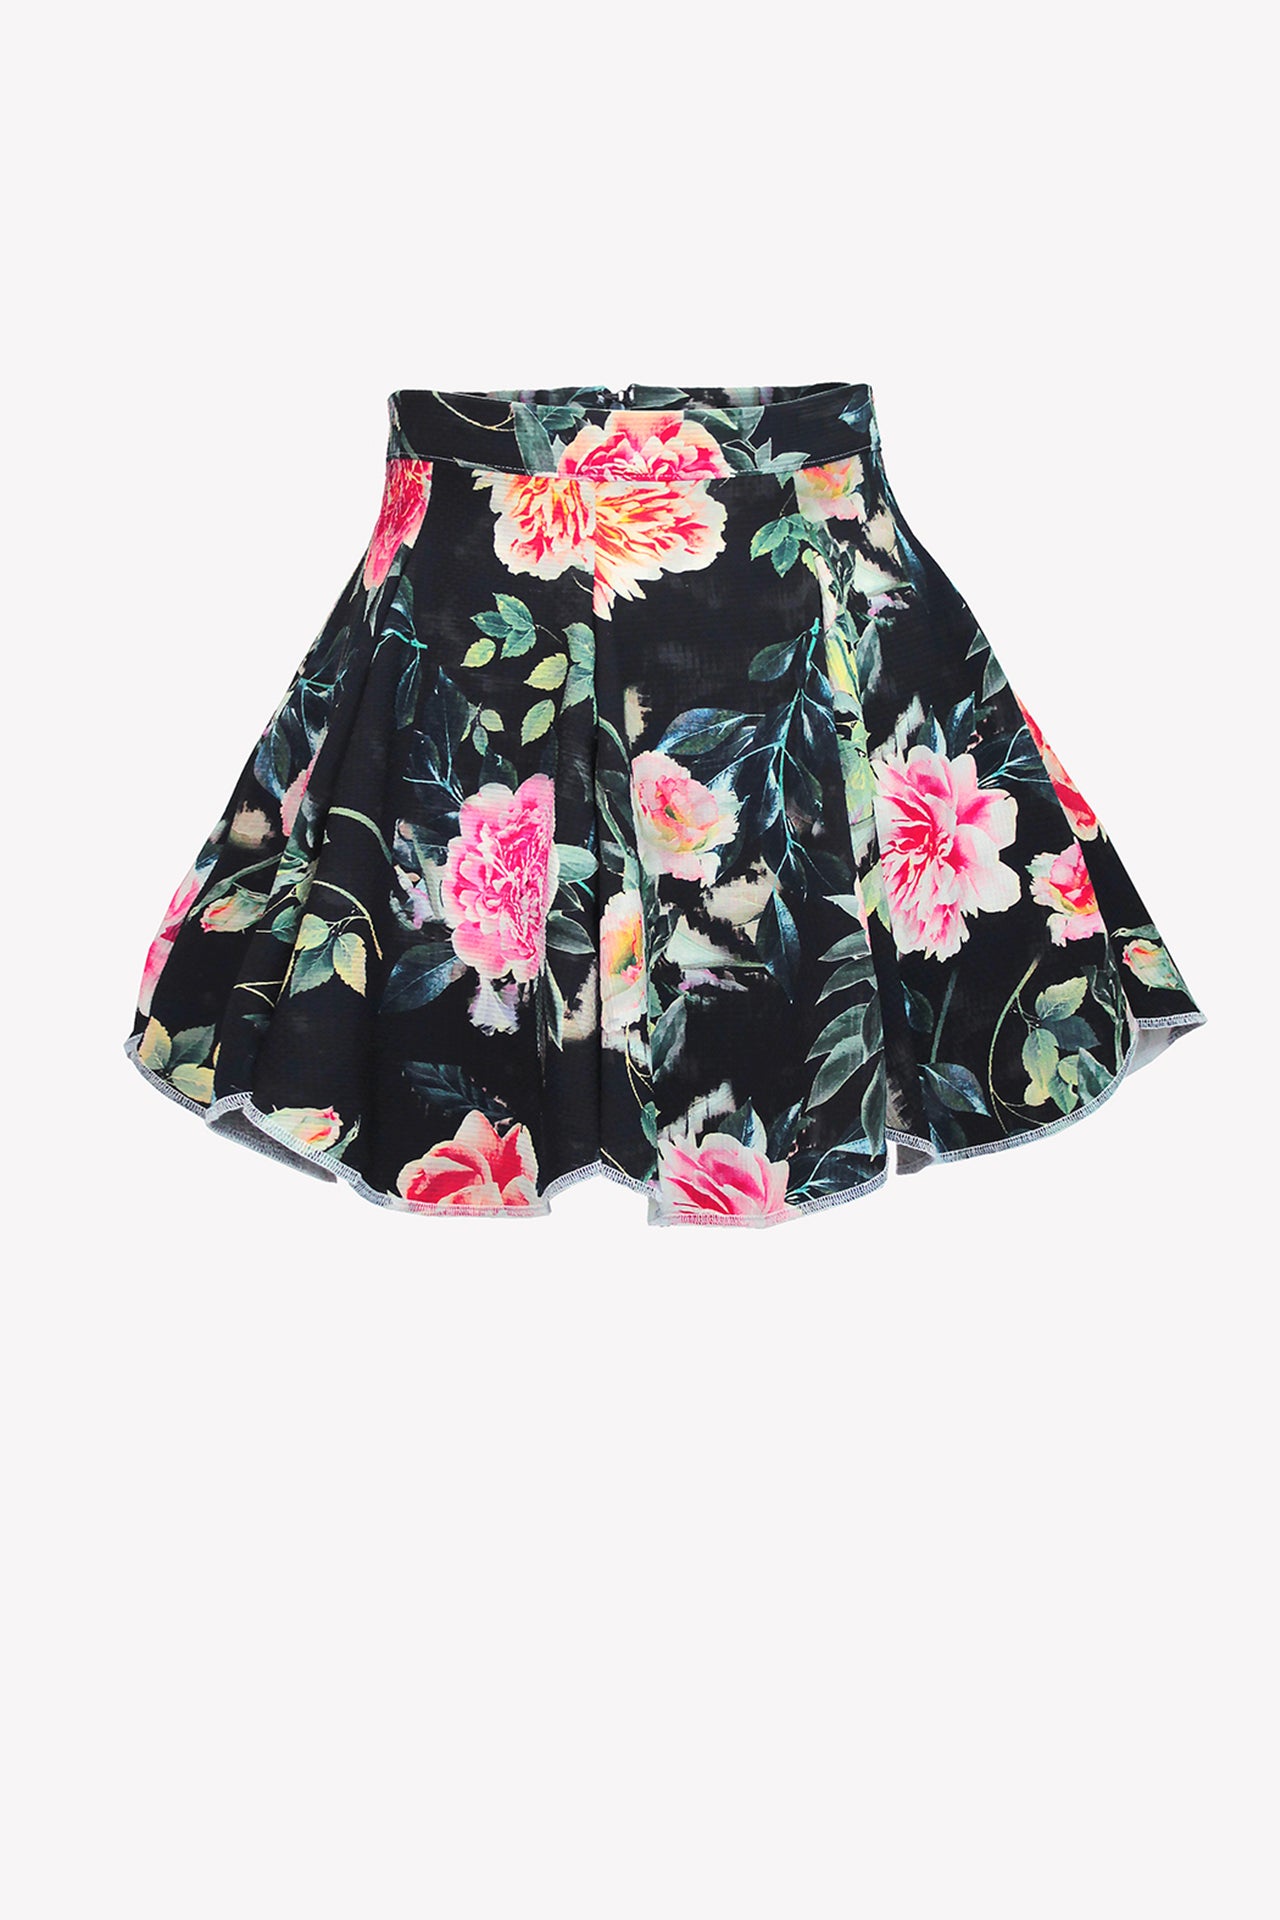 High waisted floral skirt